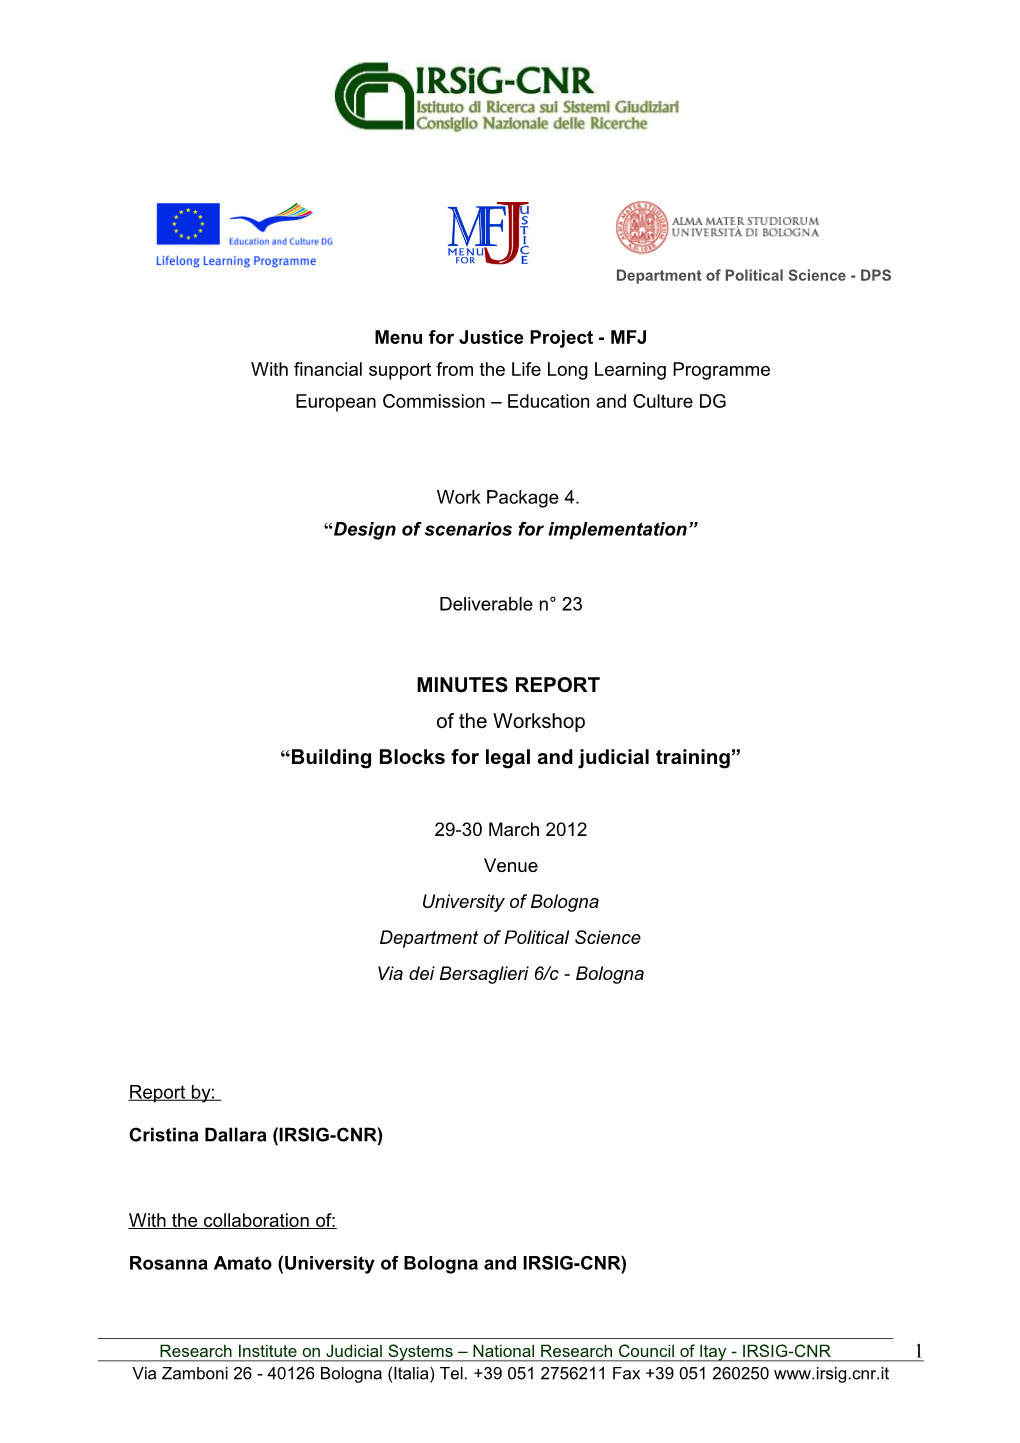 Workshop Minutes (Bologna, 29-30 March 2012)